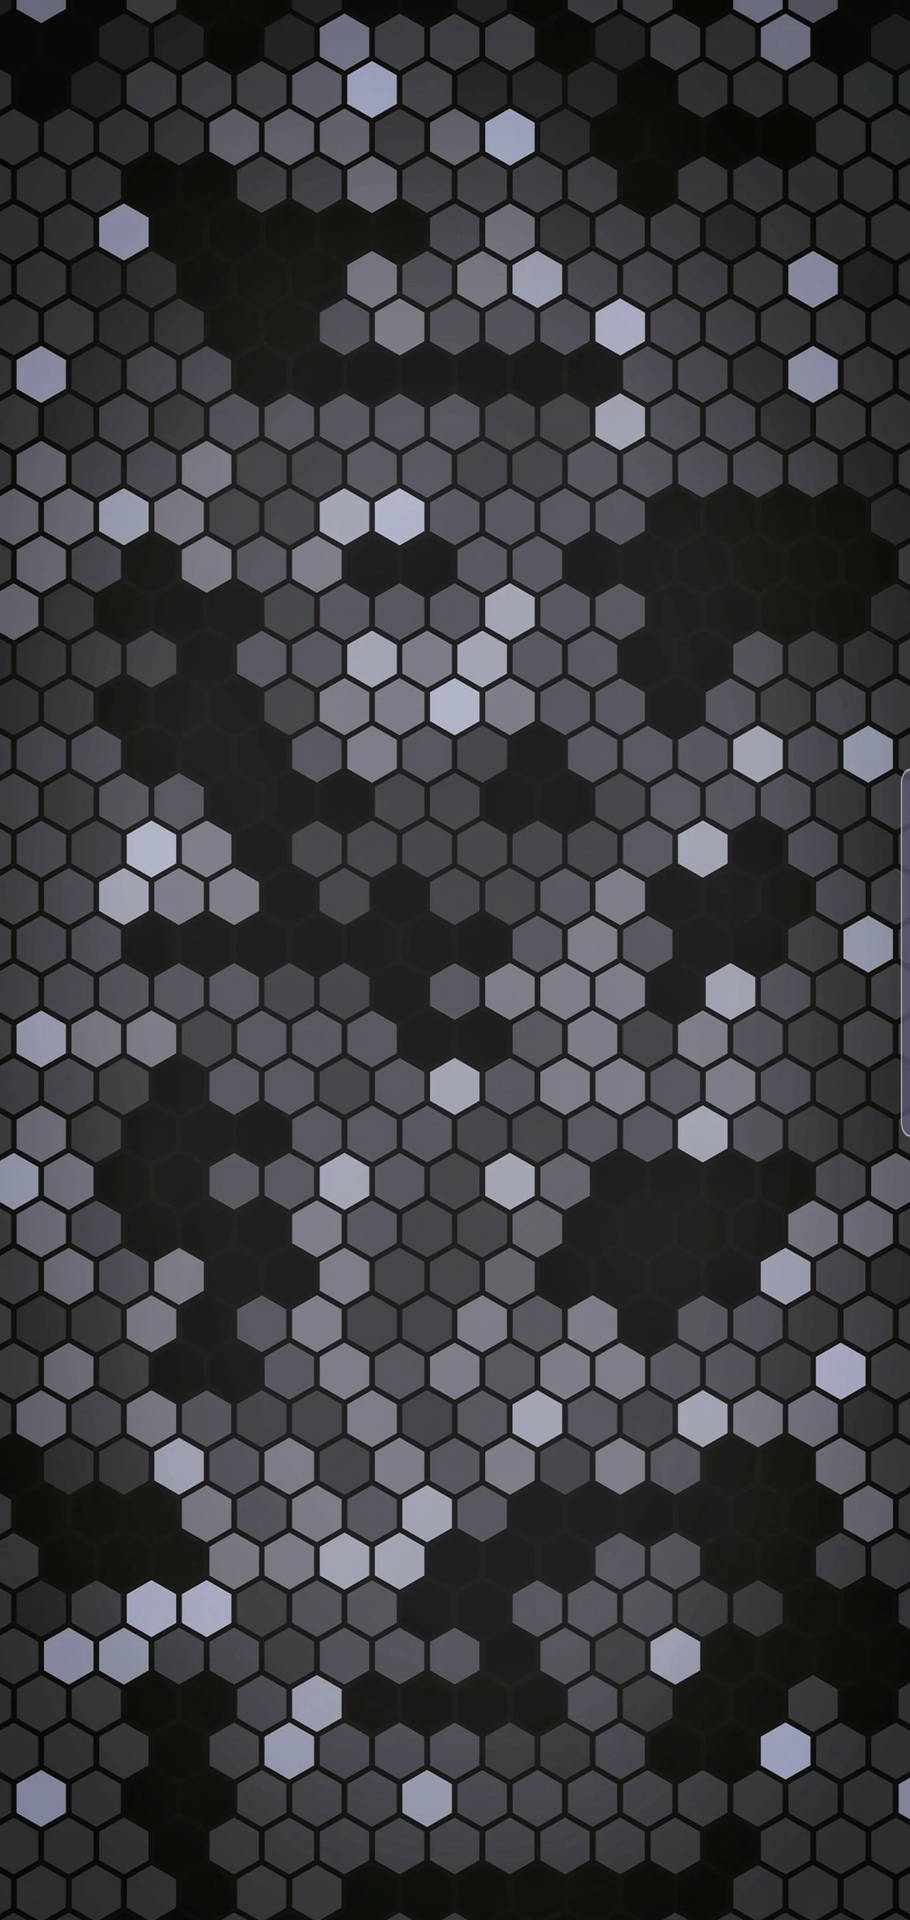 Polygon Patterns Punch Hole 4k Wallpaper